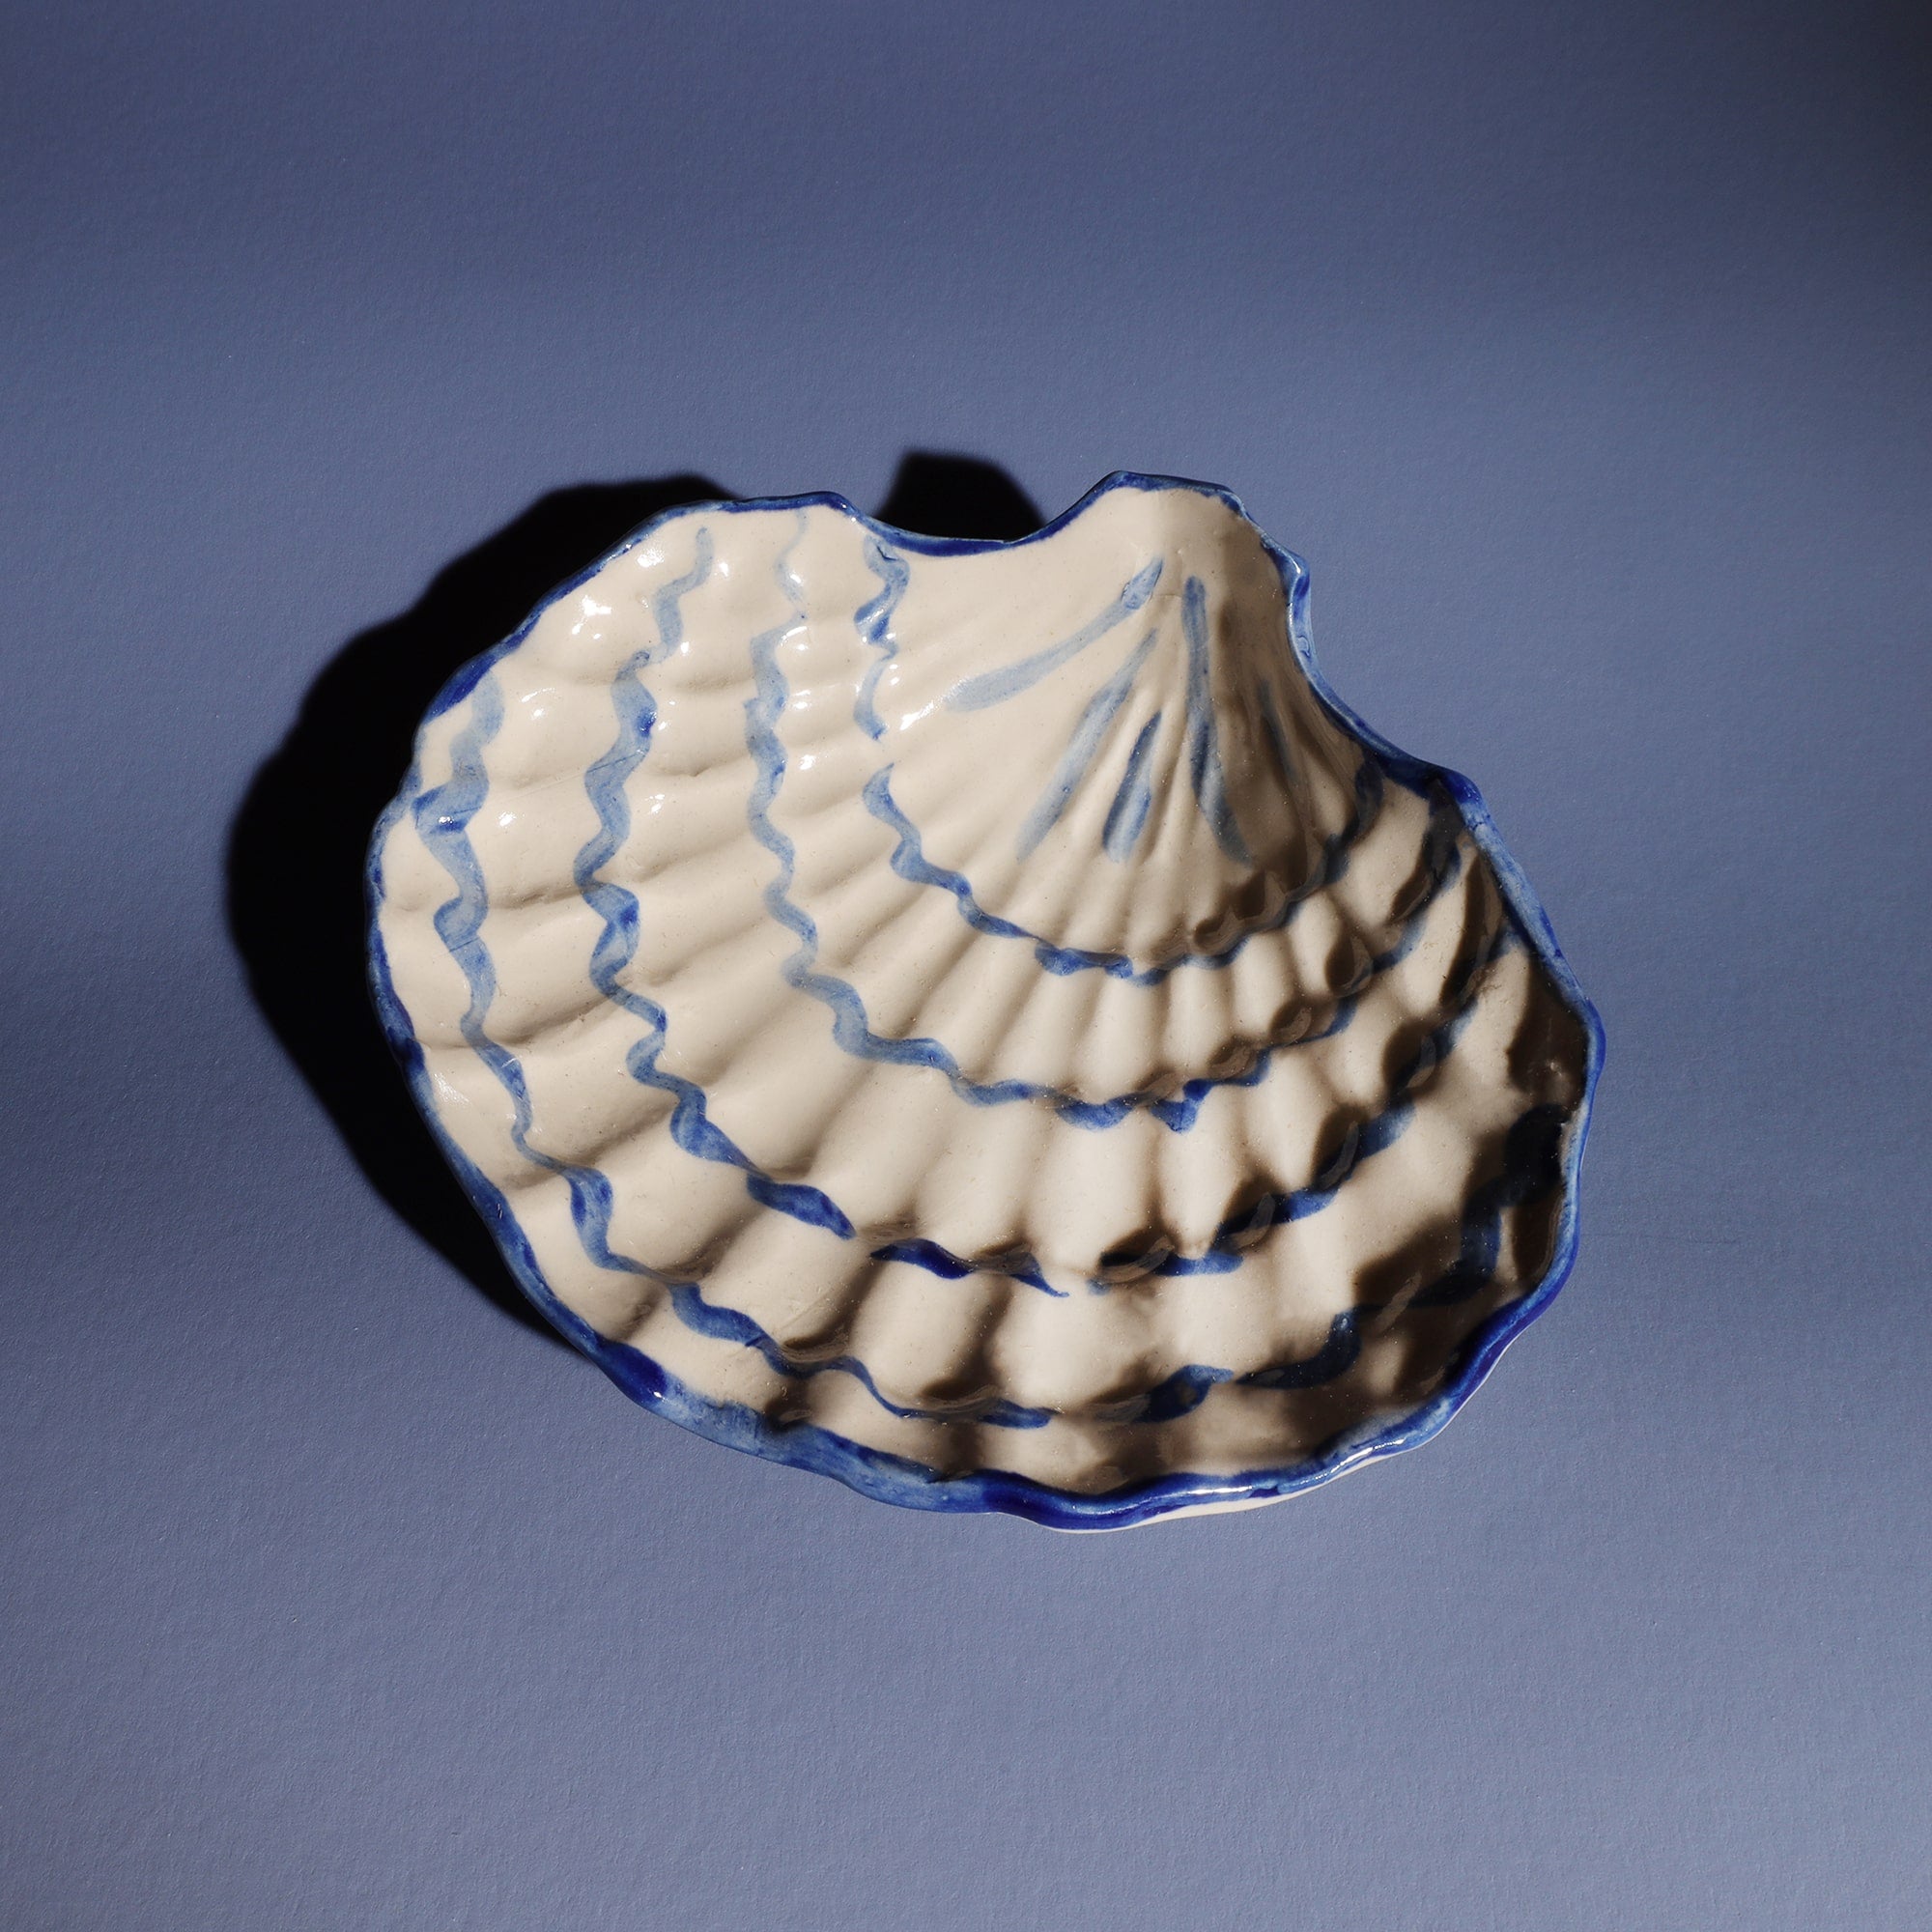 Handmade Scallop Shell Dish